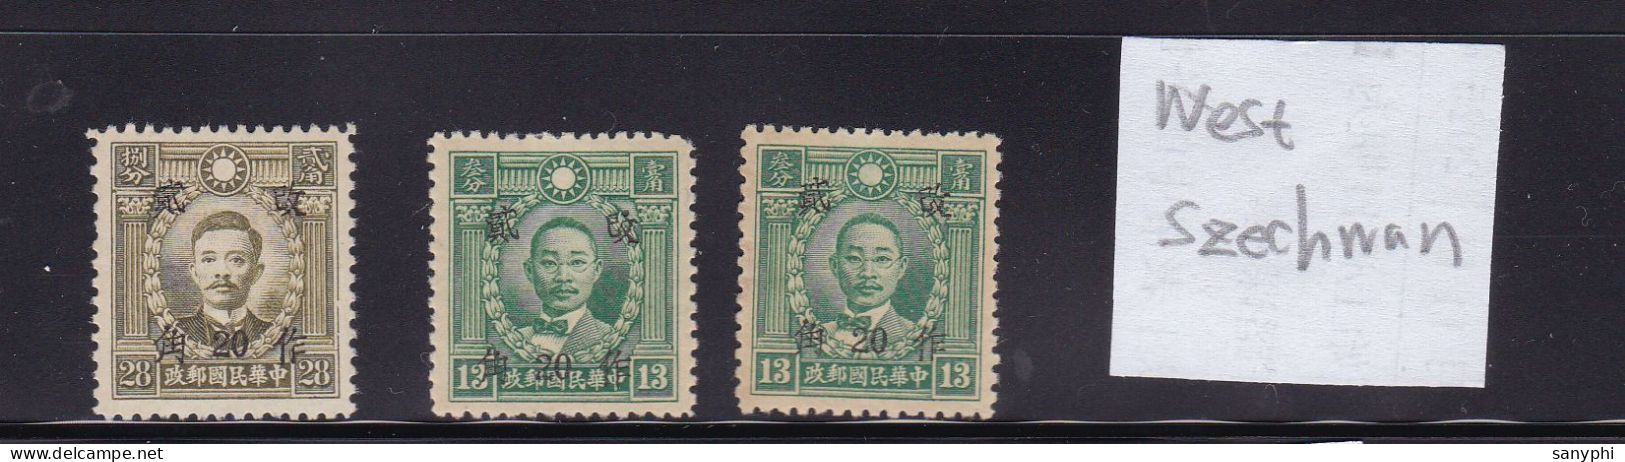 China Republic Martyt Provincial Ovpts 3 Unused Stamps-West Szechwan - 1912-1949 Repubblica